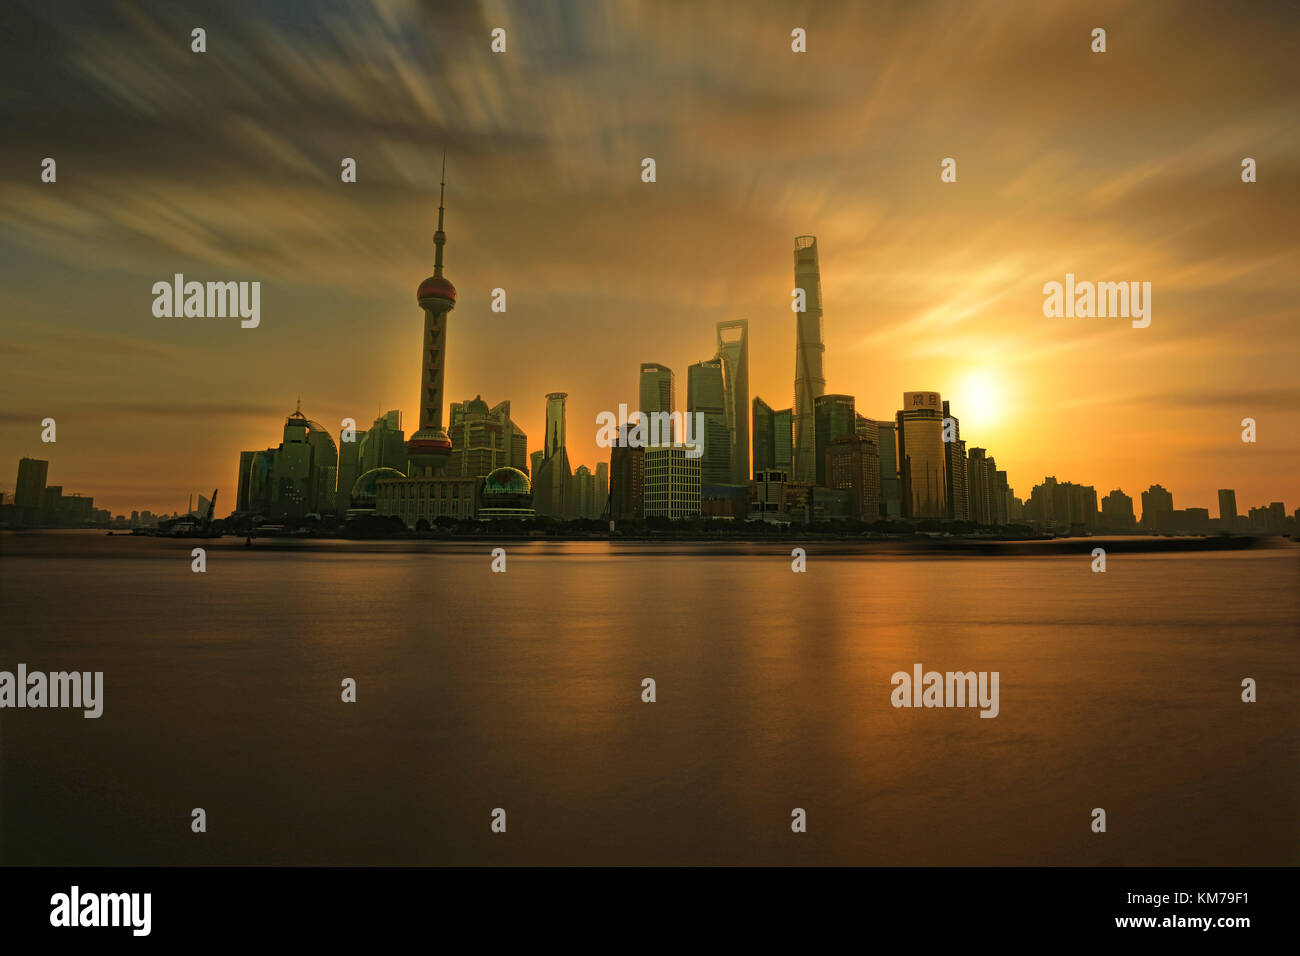 The Oriental pearl tower, Shanghai world financial center The Bund Shanghai skyline Stock Photo